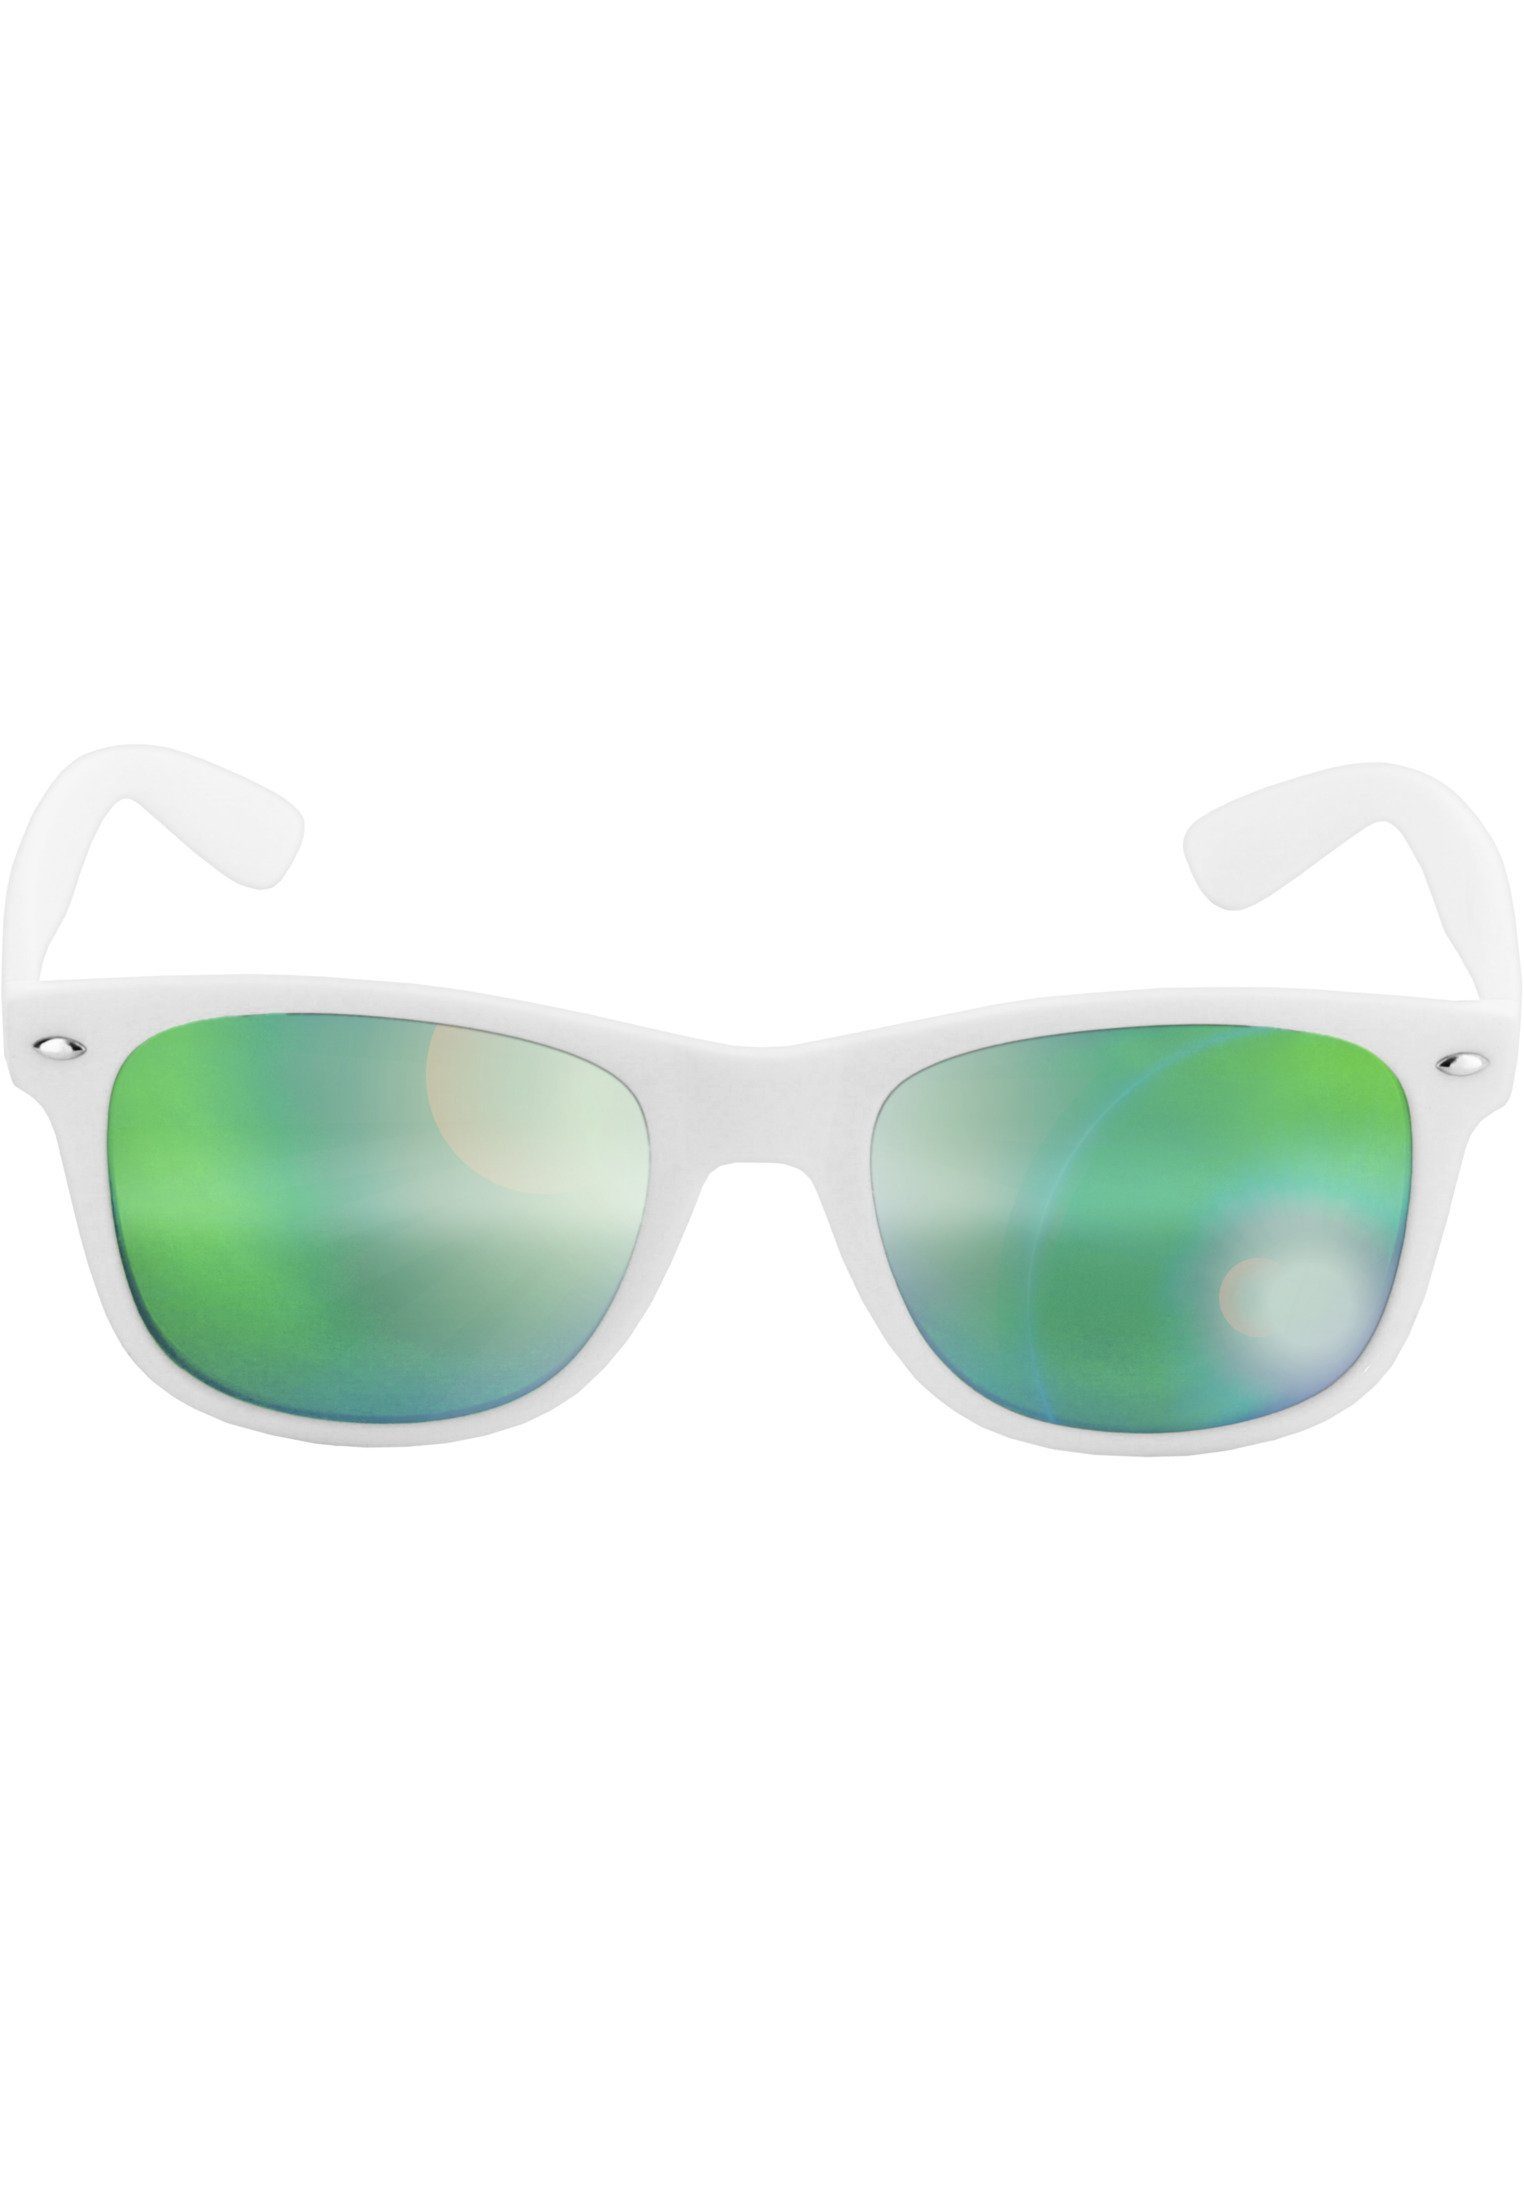 Accessoires Sunglasses Mirror Sonnenbrille wht/grn Likoma MSTRDS